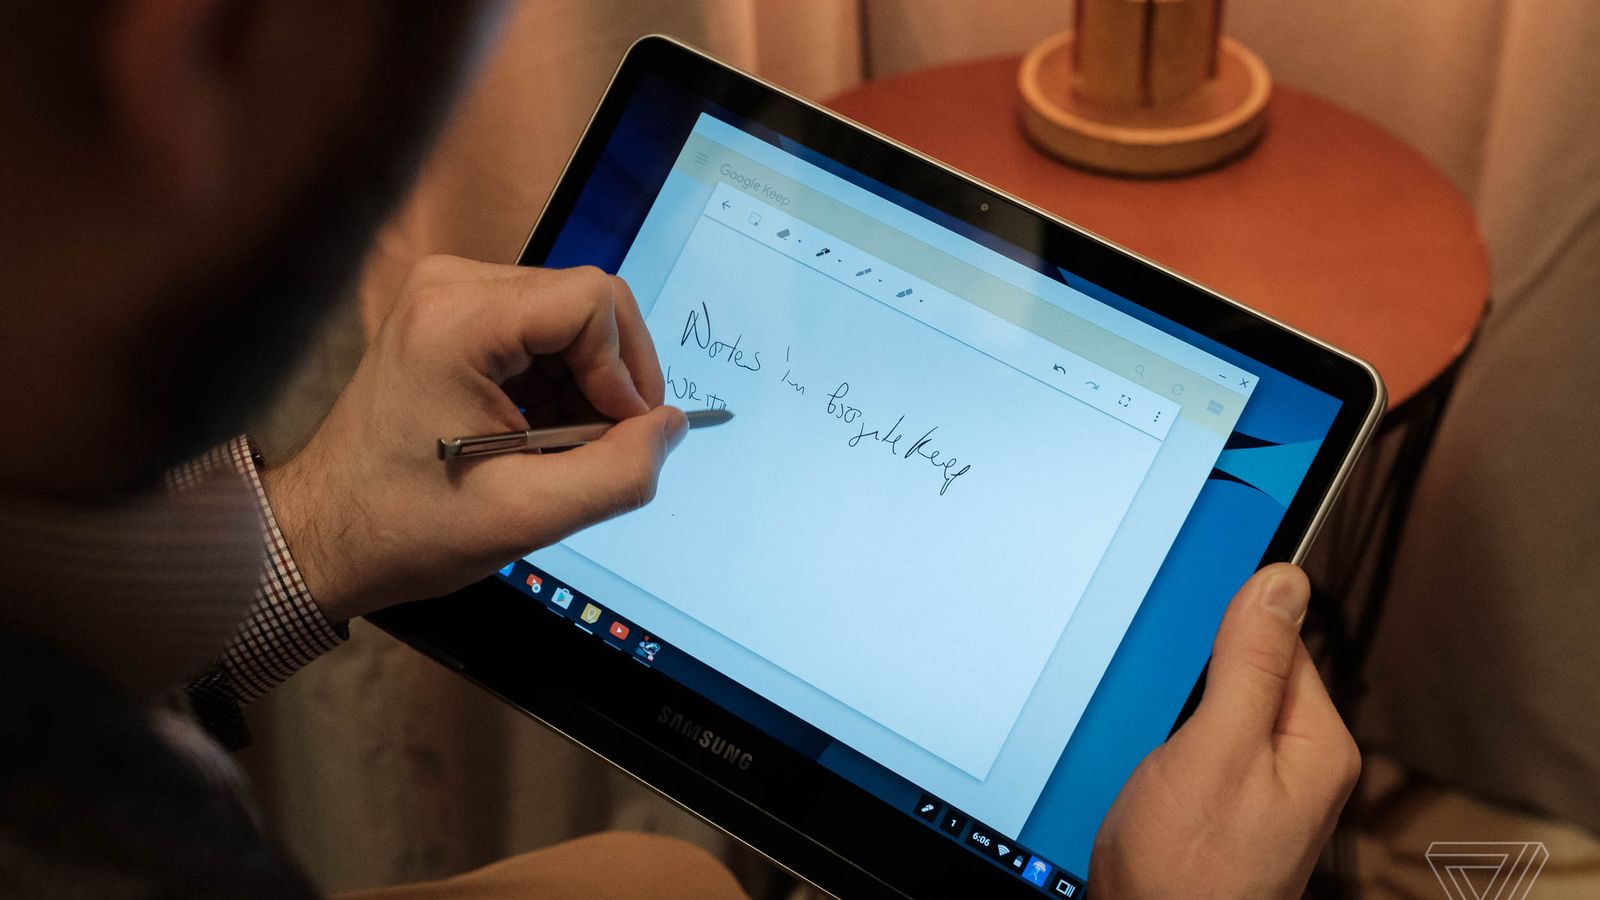 Coming soon – ChromeOS tablets!